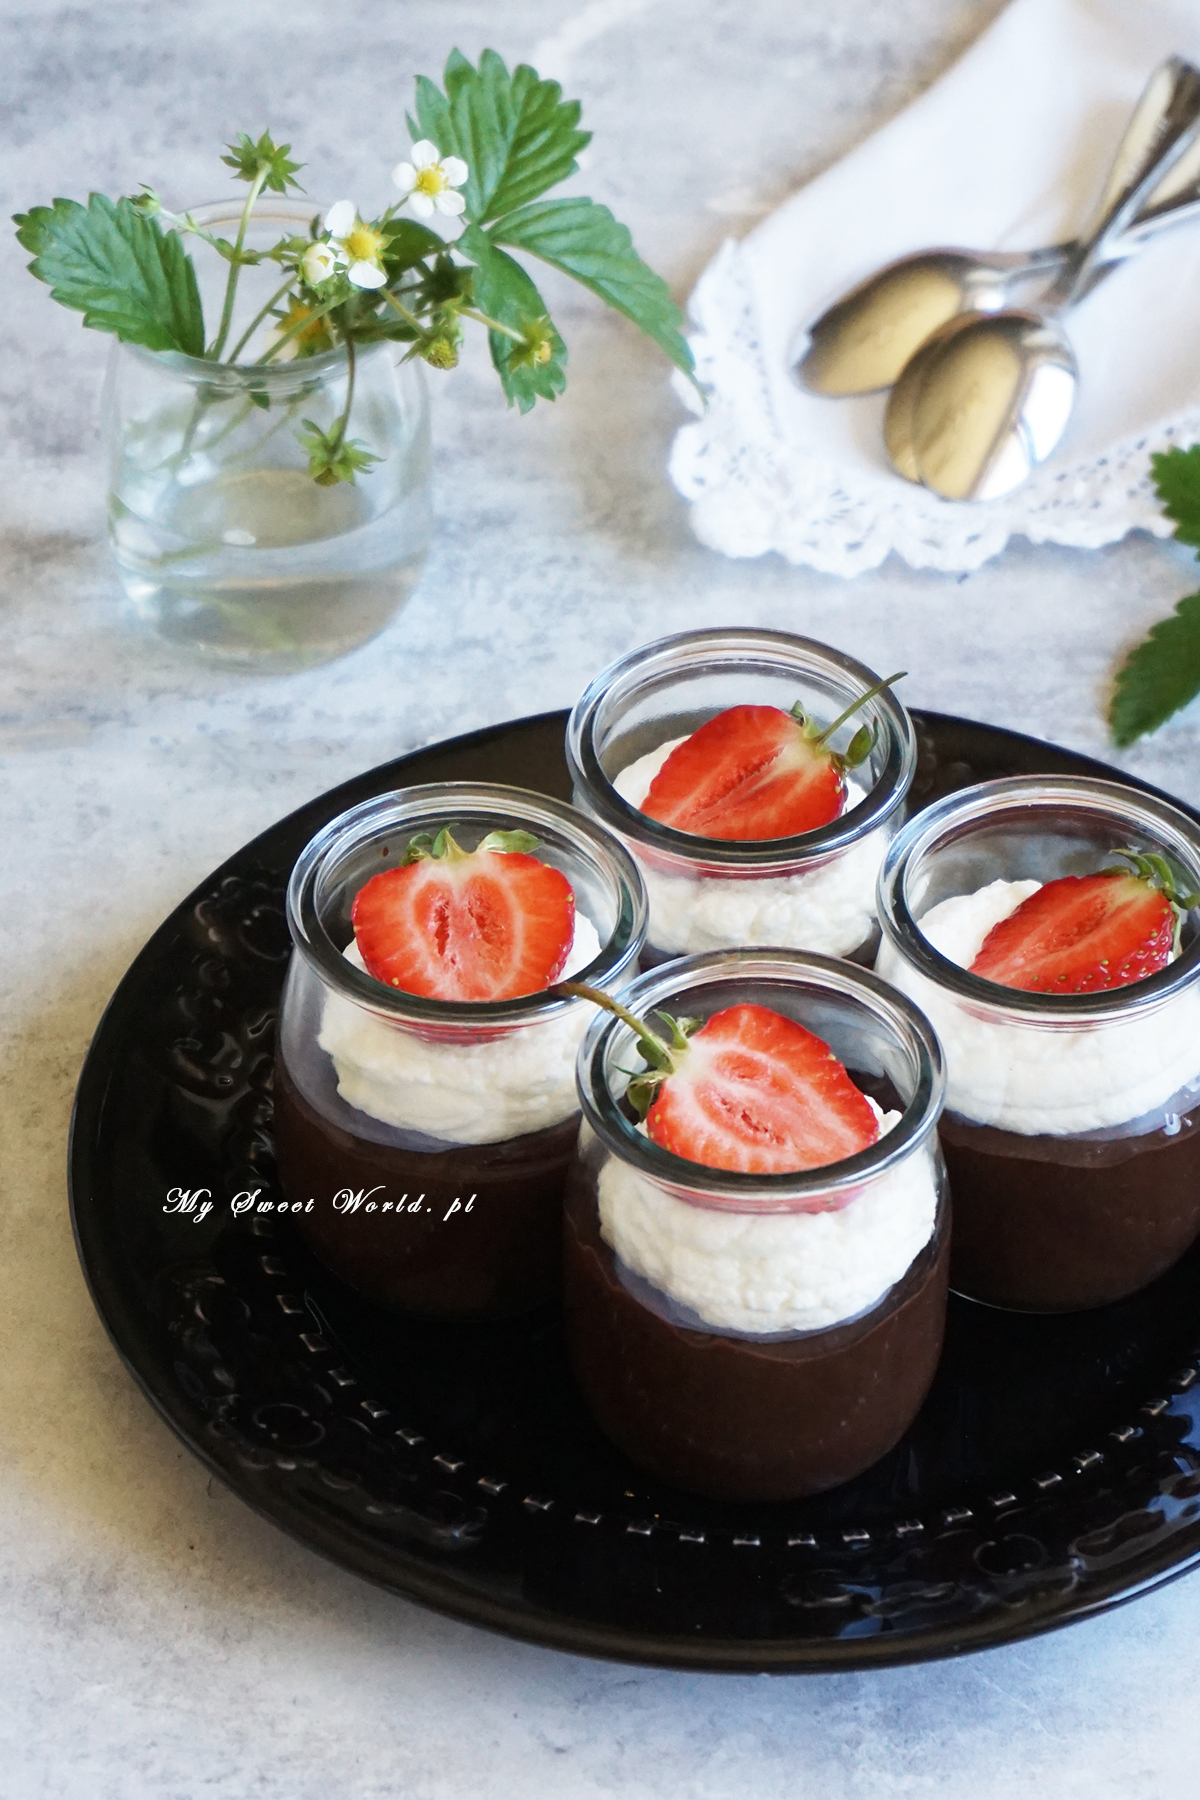 Pots de crème au chocolat- francuskie desery czekoladowe